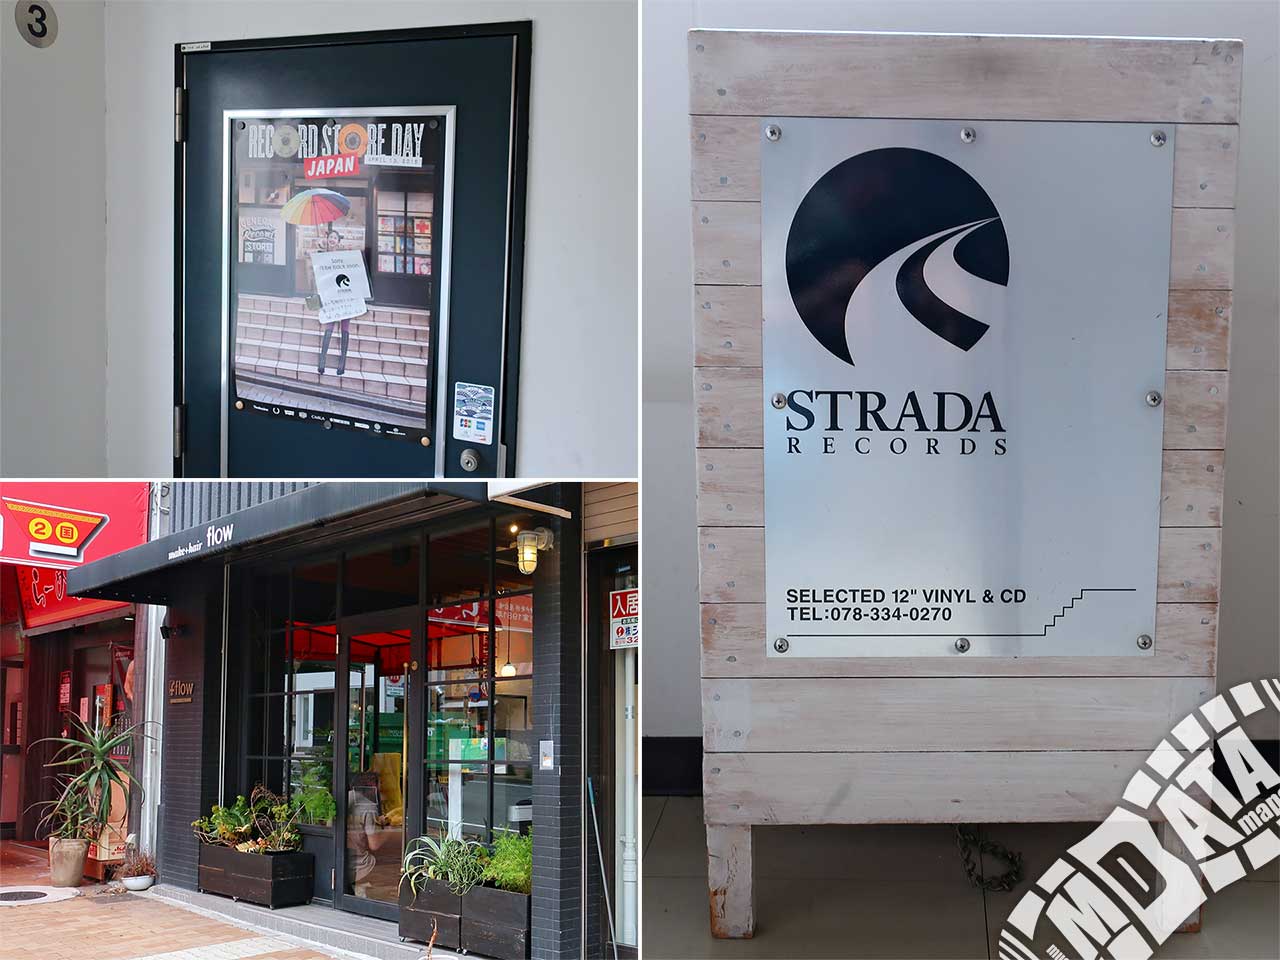 Strada Recordsの写真 撮影日:2019/6/12 Photo taken on 2019/06/12